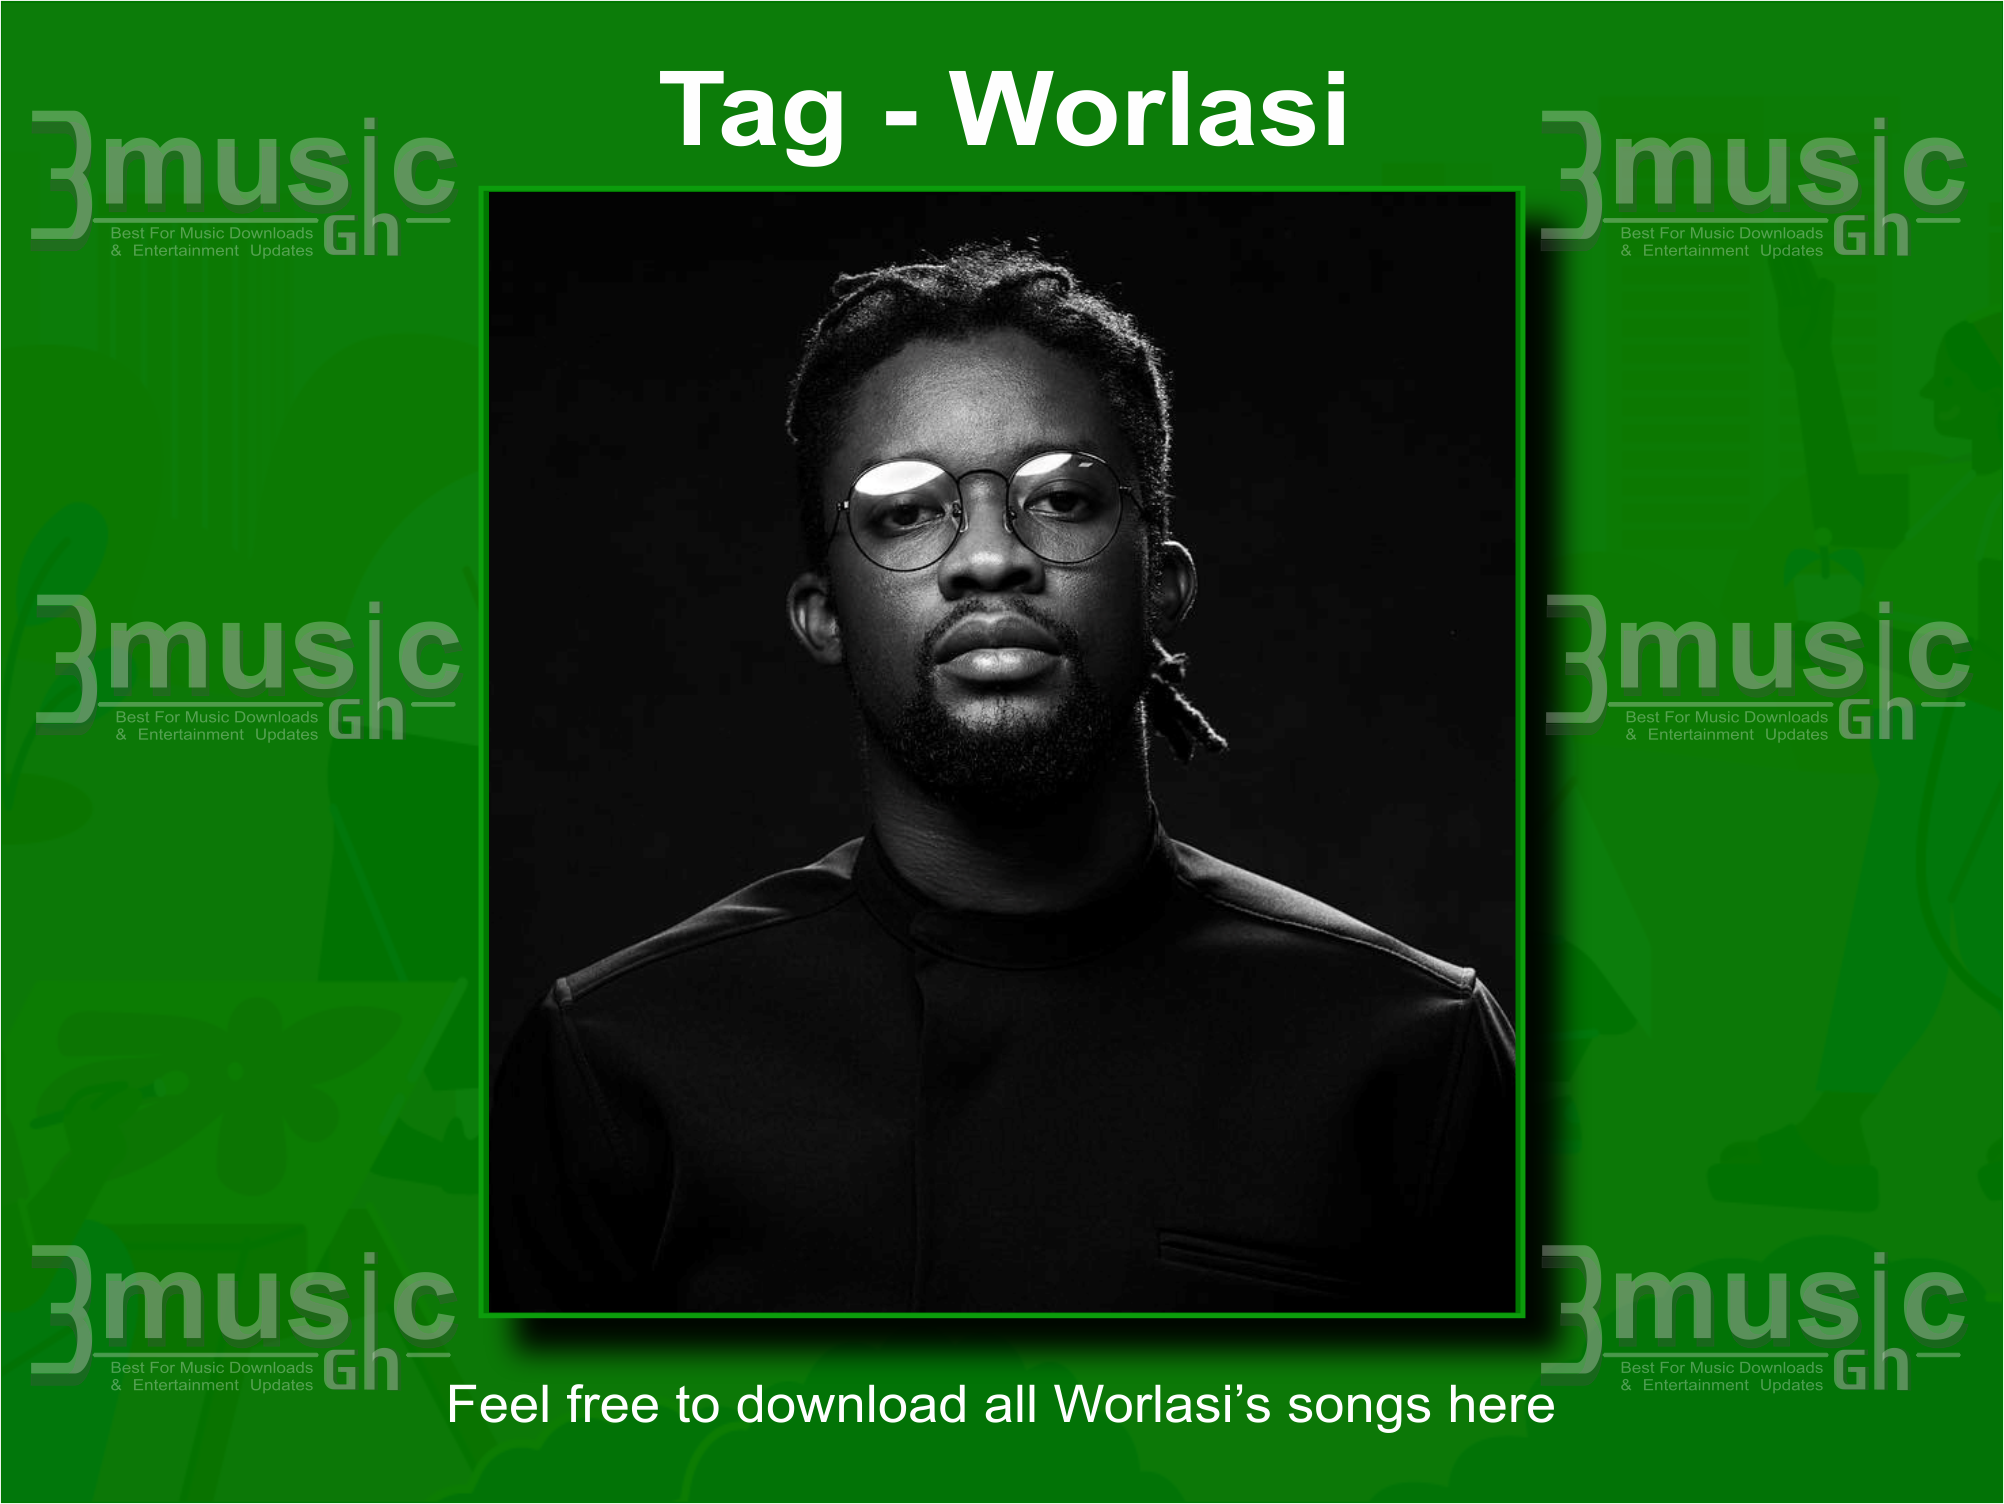 Worlasi songs download_3musicgh.com